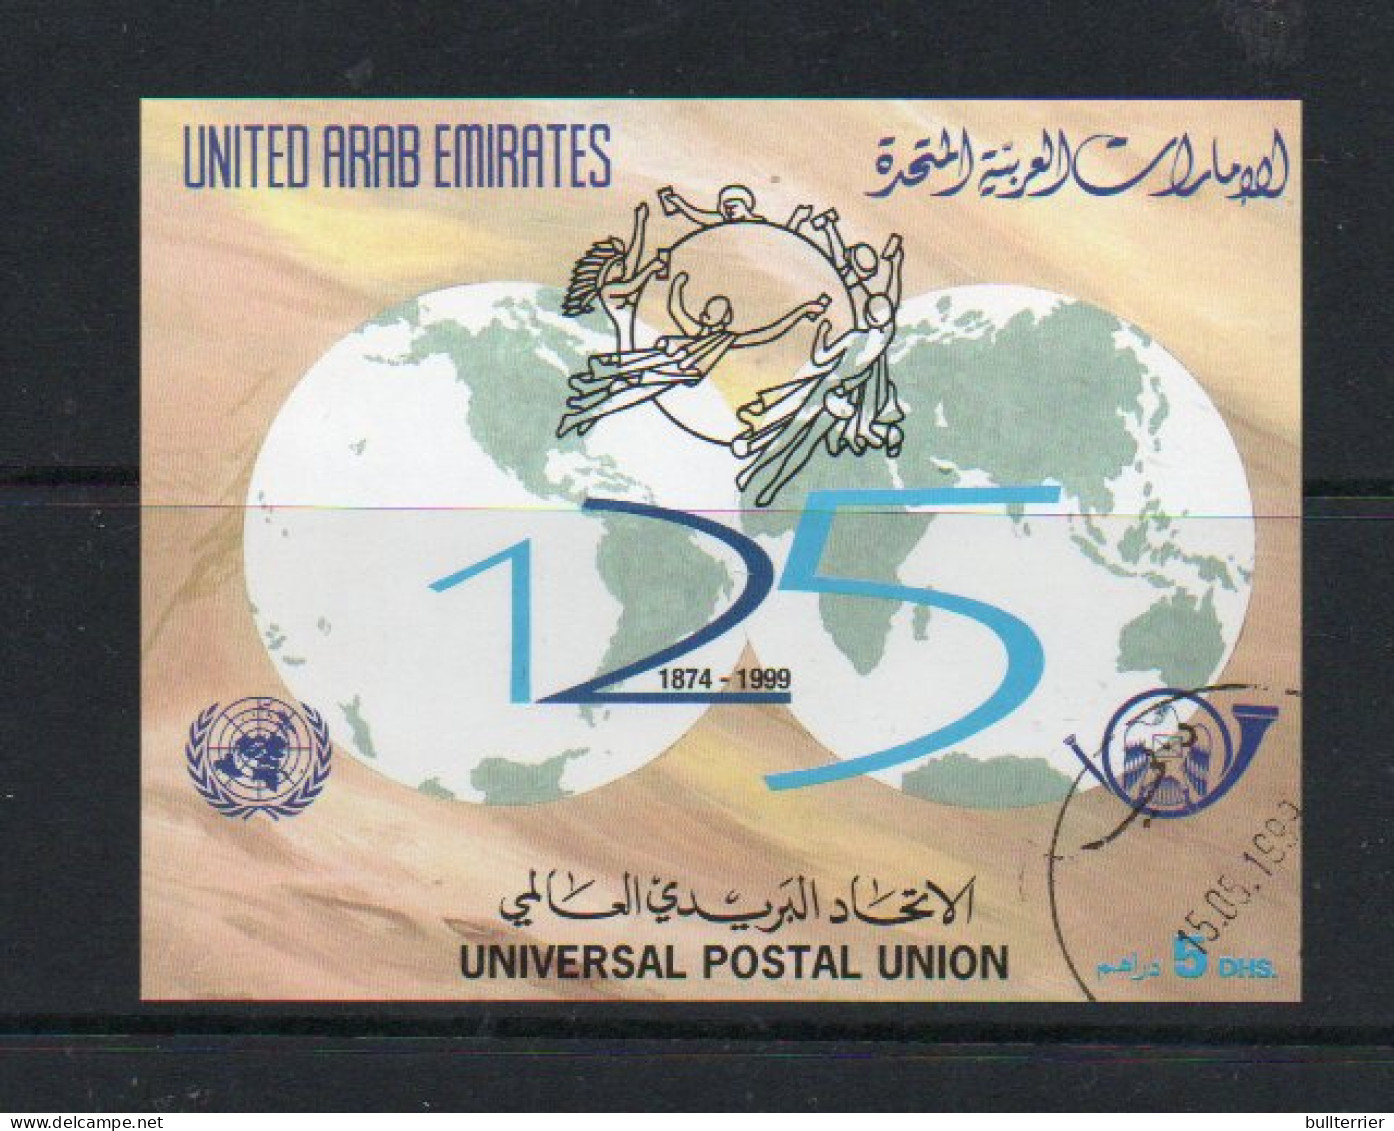 UNITED ARAB EMIRATES - 1999 - UPU SOUVENIR SHEET FINE USED  - Emirats Arabes Unis (Général)